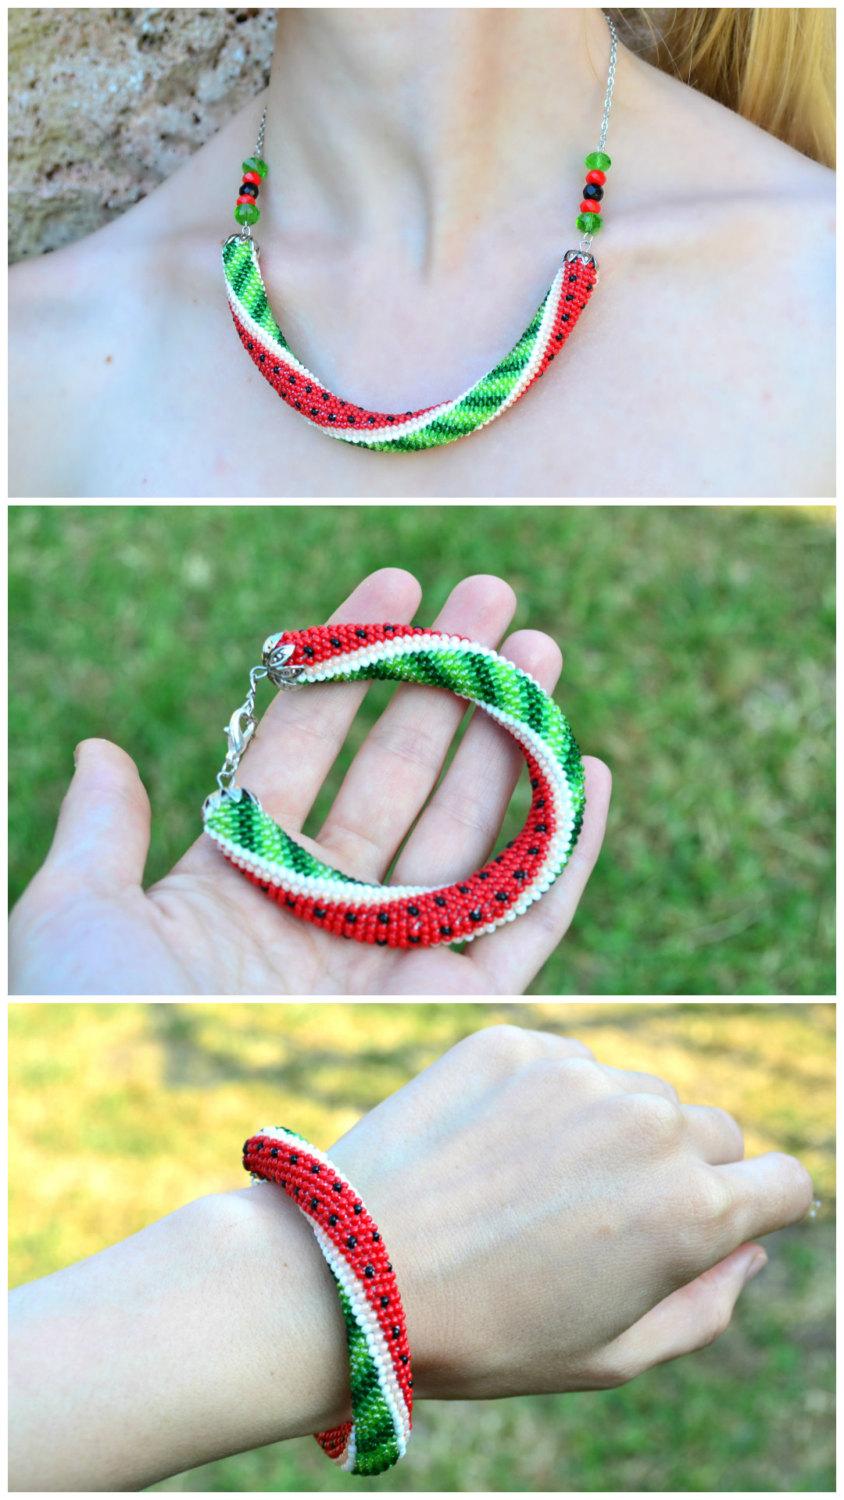 Wedding - 10% OFF Watermelon bracelet necklace jewelry. Berry jewelry bracelet necklace. Green red summer berry bead crochet rope bracelet jewelry.